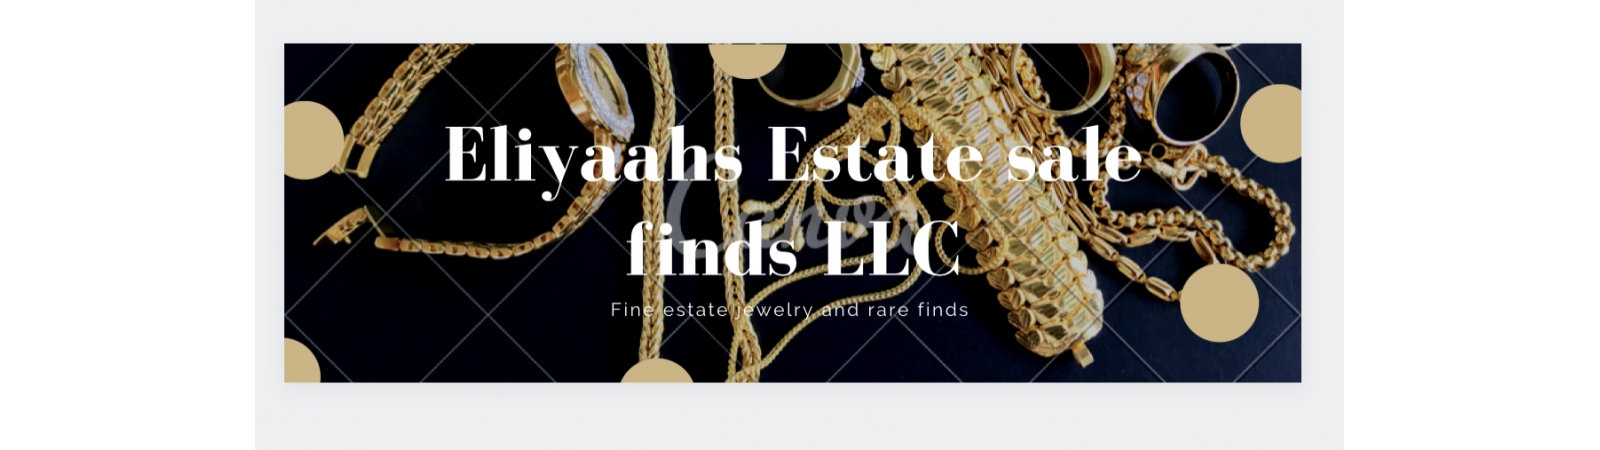 Eliyaahs Estate Sales Find LLC | AuctionNinja